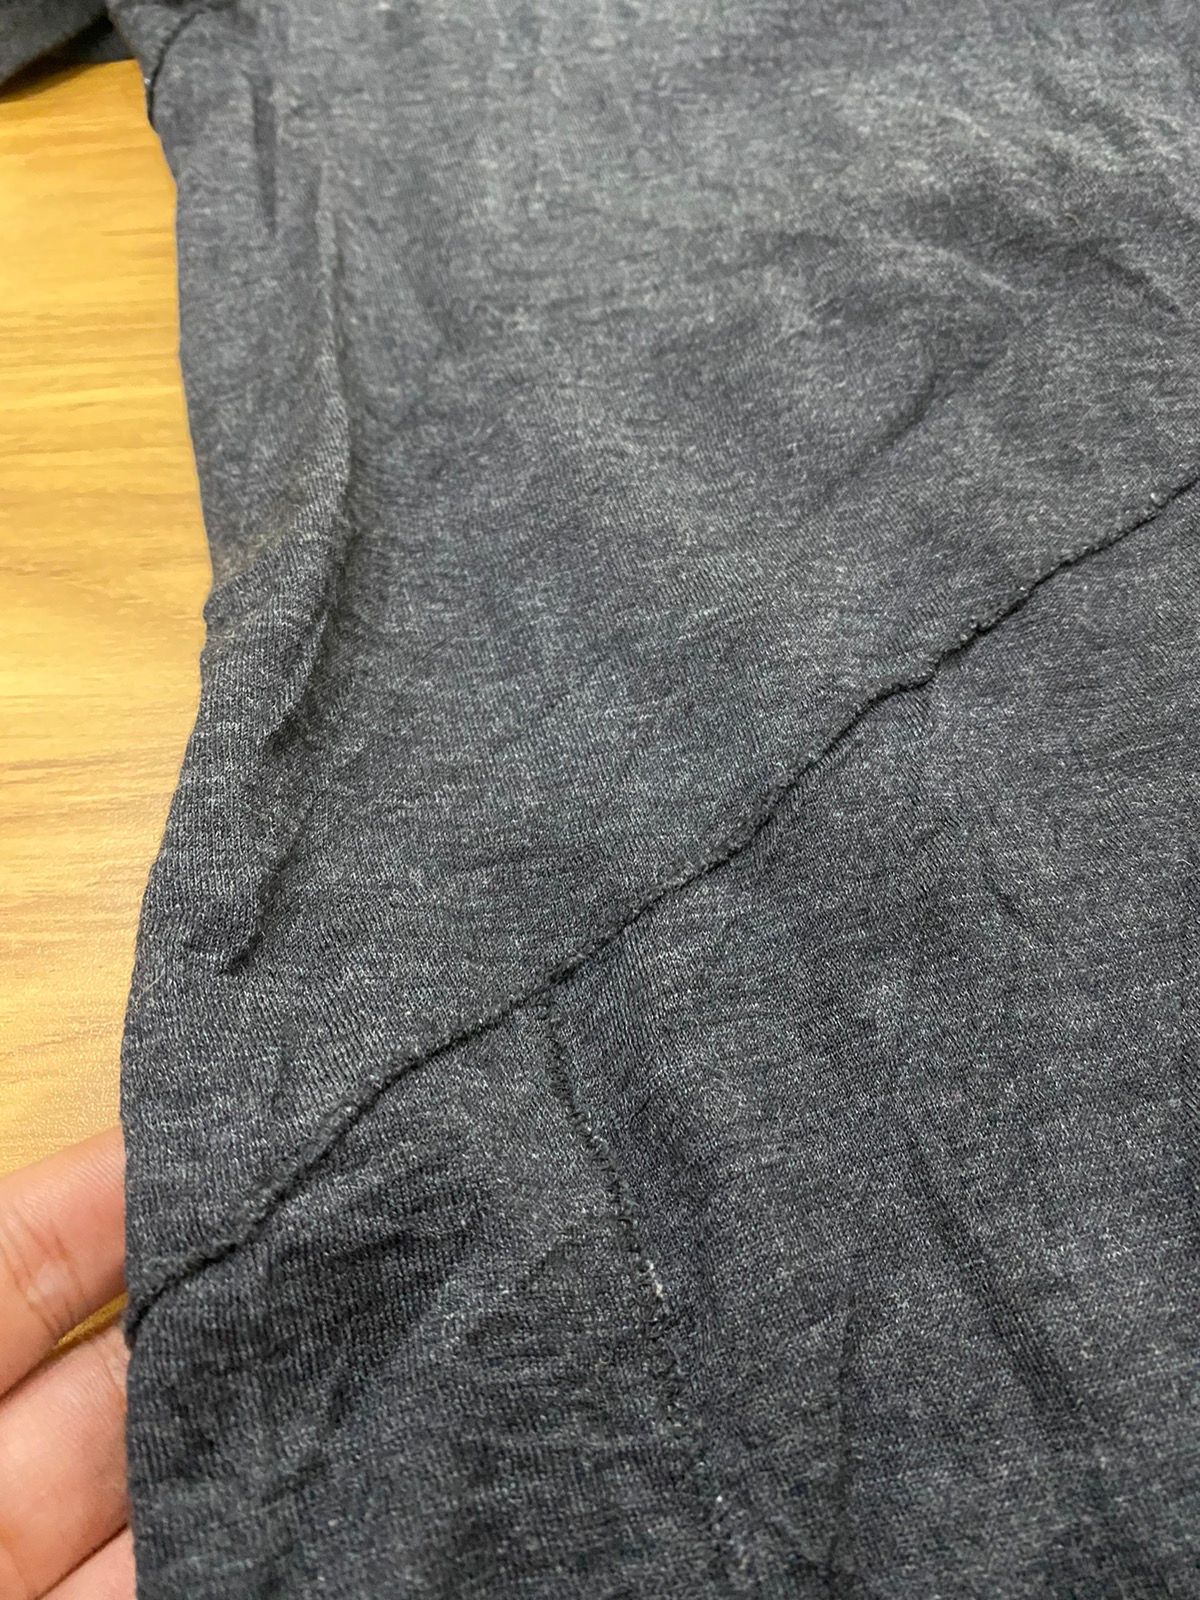 AW91 Rei Kawakubo Cut And Sew Wool Sample L/S Shirt - 4